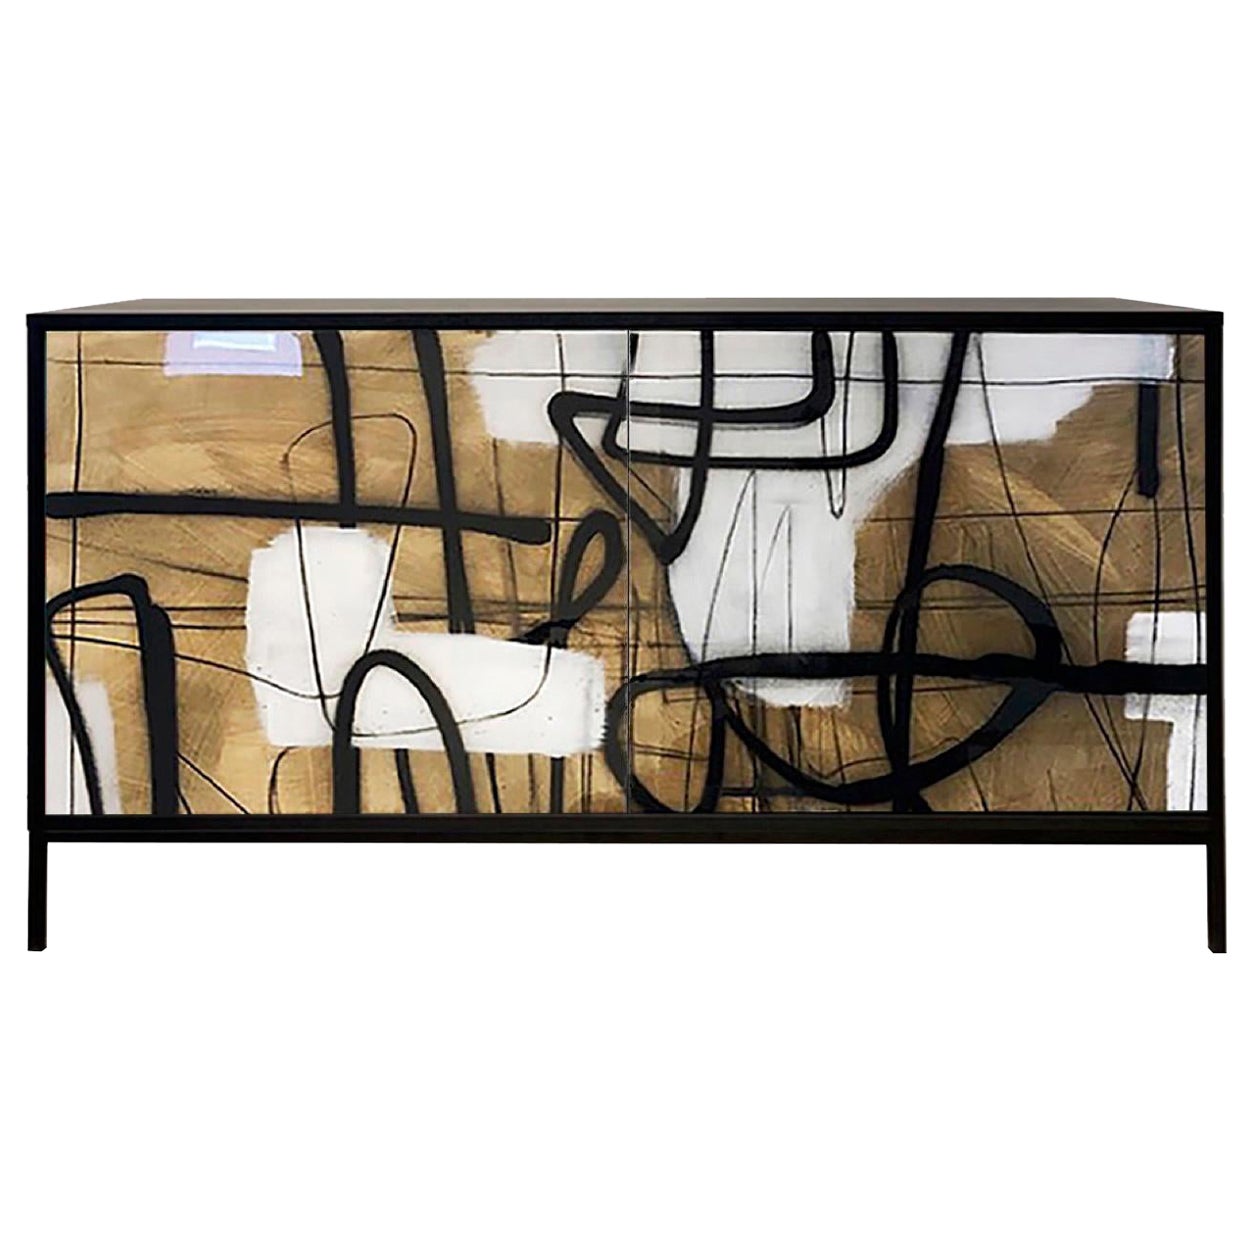 Enamel Abstract cabinet by Morgan Clayhall, mix media artwork on doors